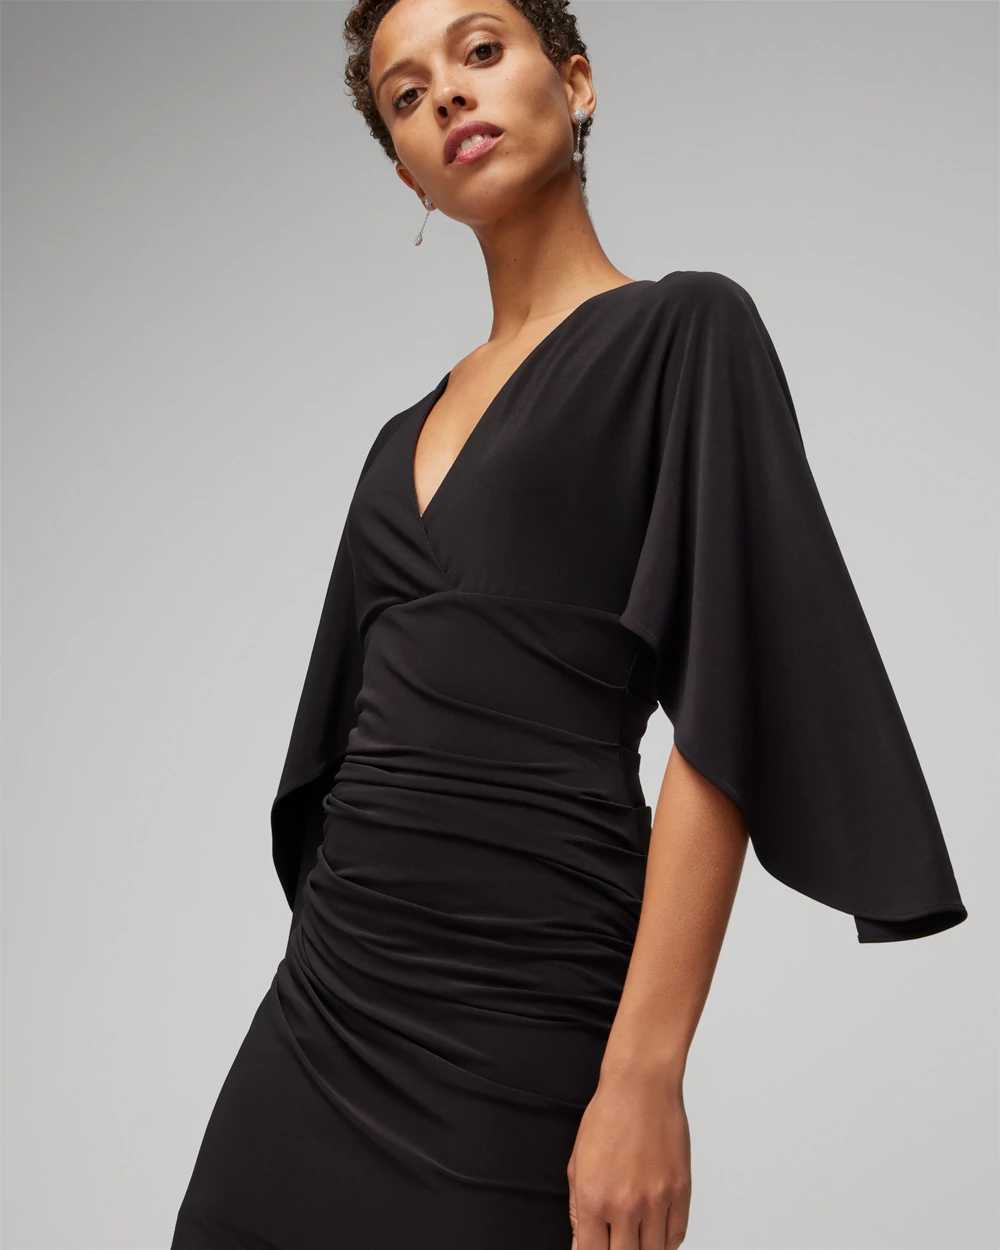 3/4 Flutter Sleeve Matte Jersey Mini Dress click to view larger image.